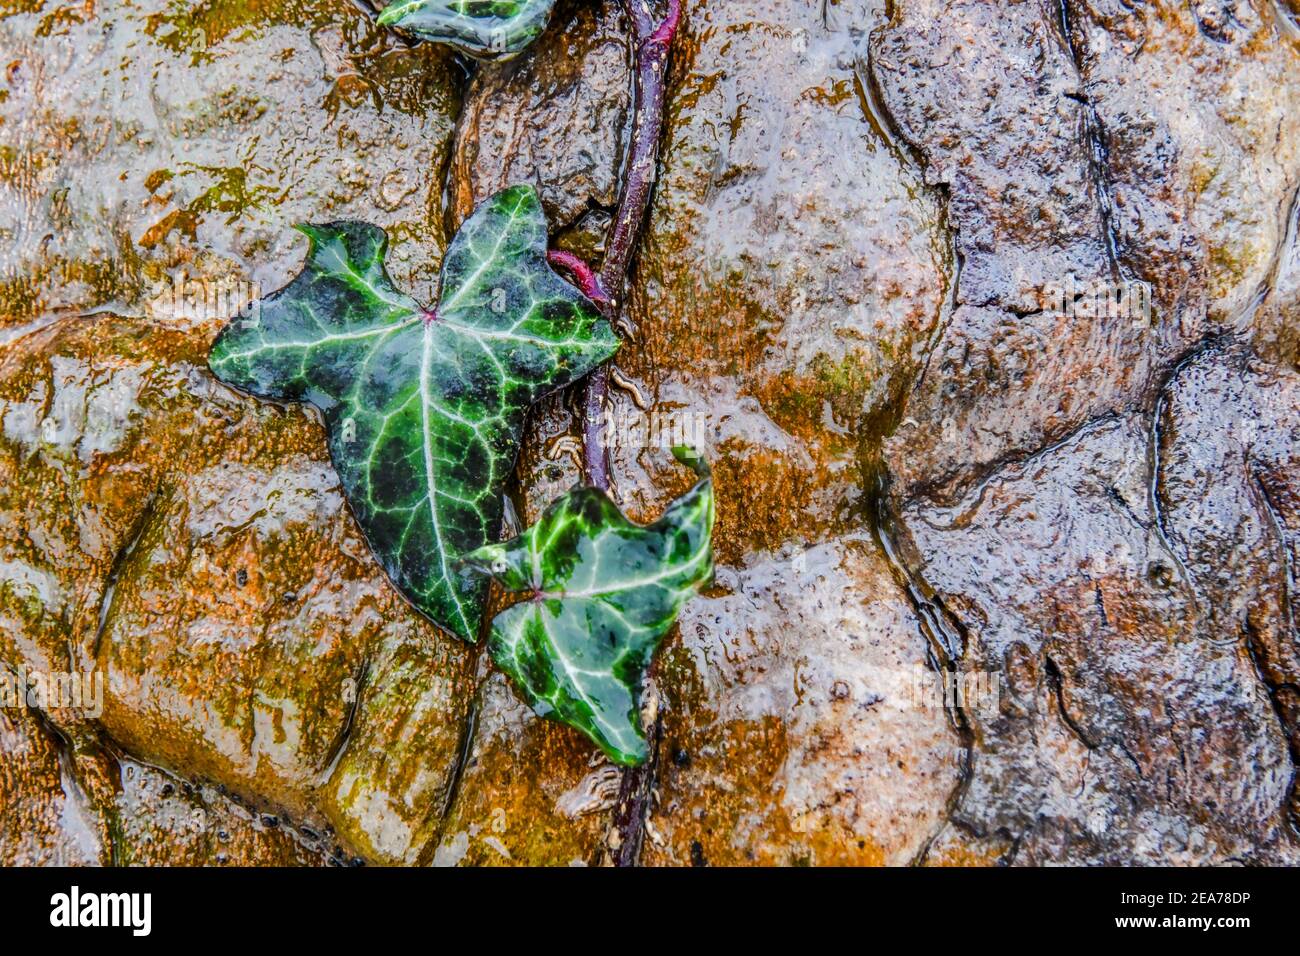 Efeu am Baumstamm - feuchte Hedera-Helix-Blätter - Efeublatt - Efeu Efeu - Blühende Pflanze Stockfoto